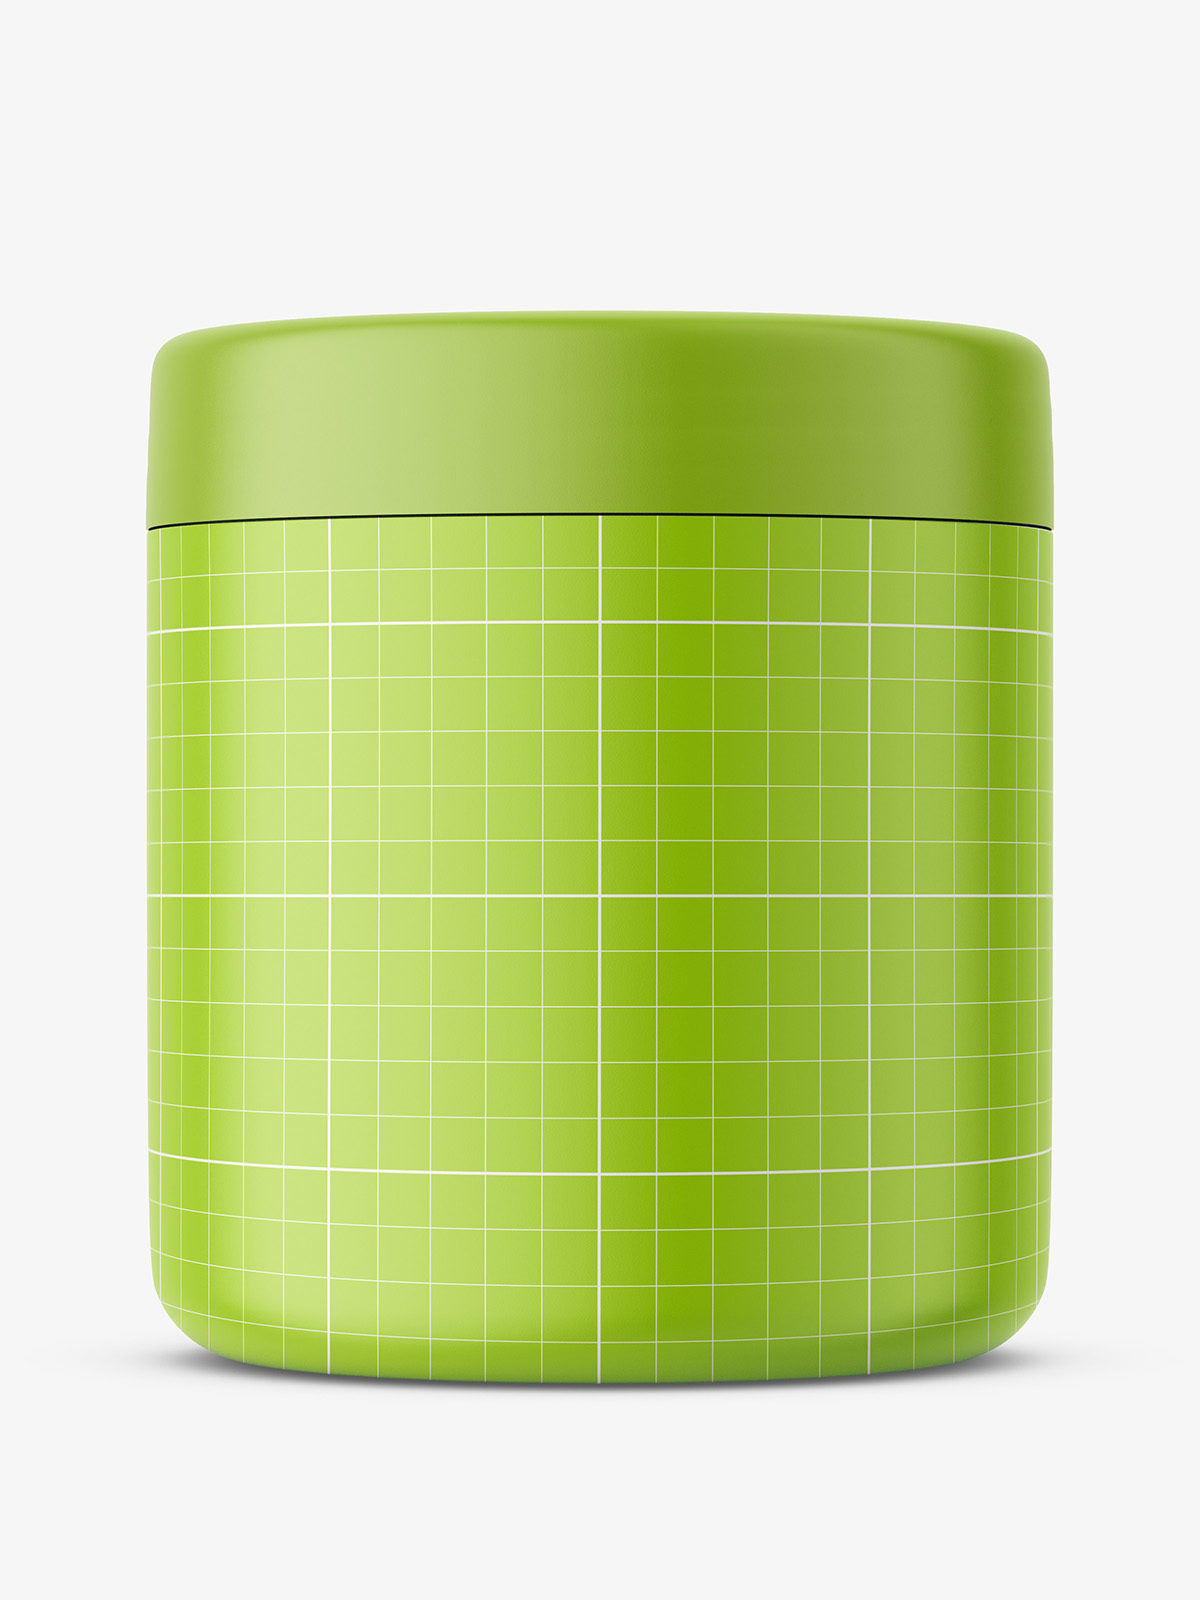 Matt cosmetic jar with glossy cap mockup - Smarty Mockups